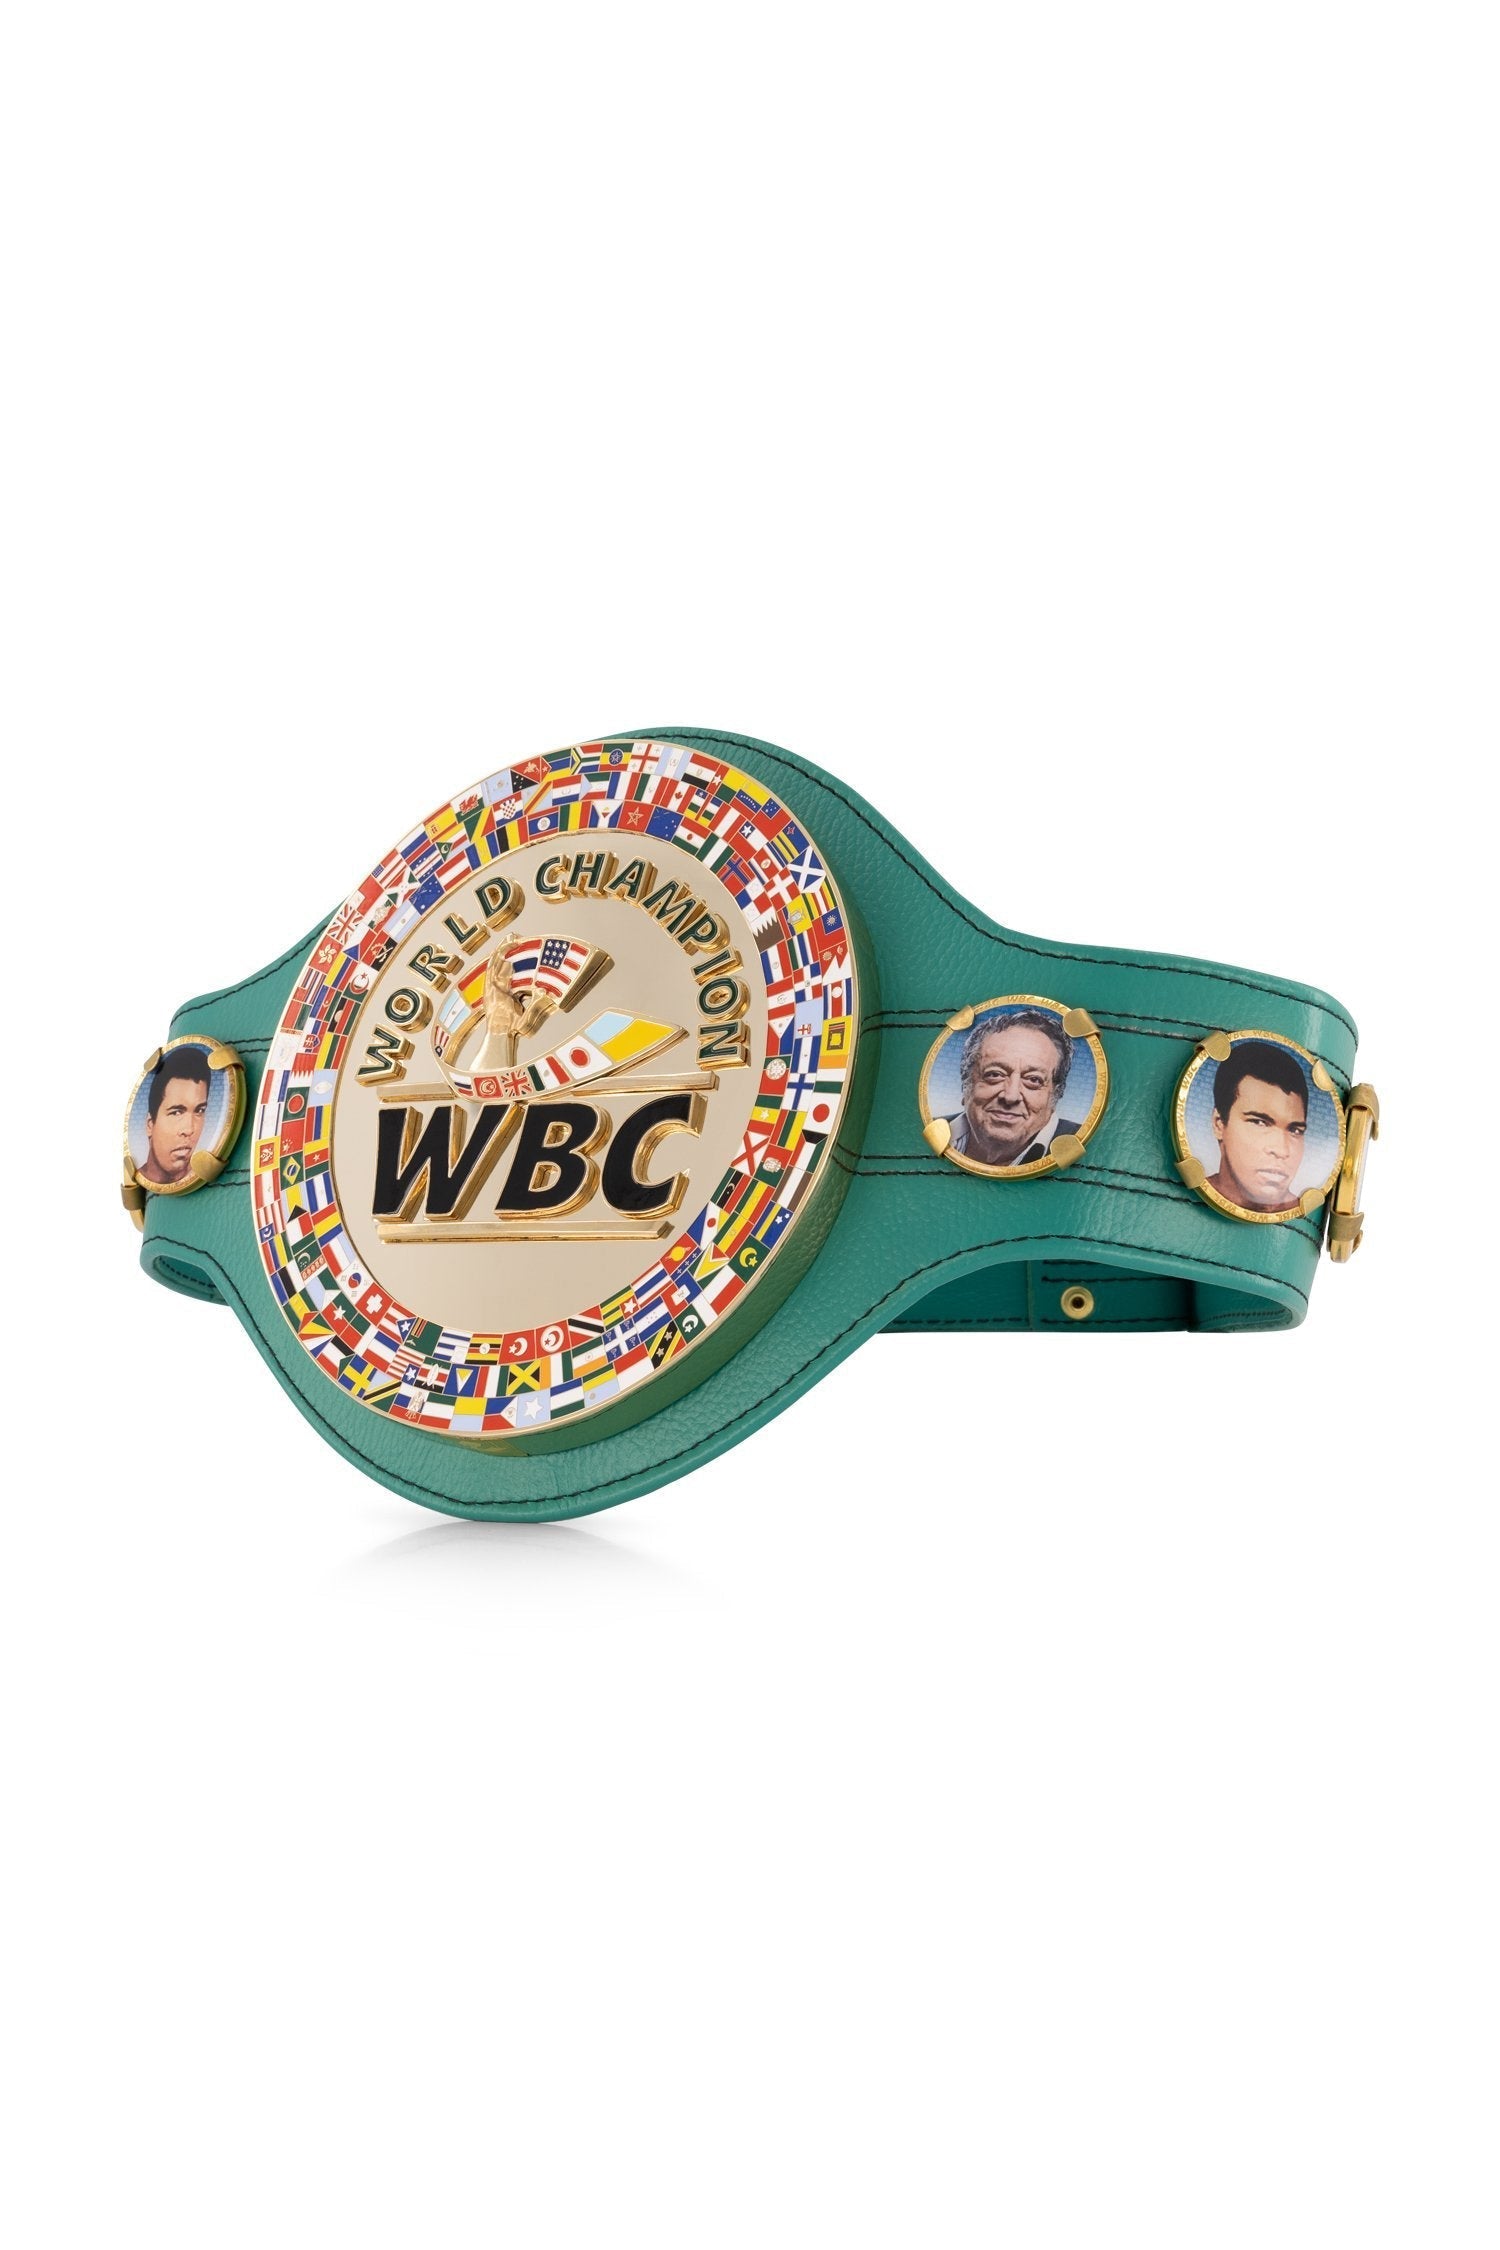 WBC Store Replica Belts WBC Championship Belt  "Historic Fights" Muhammad Ali vs. Joe Frazier